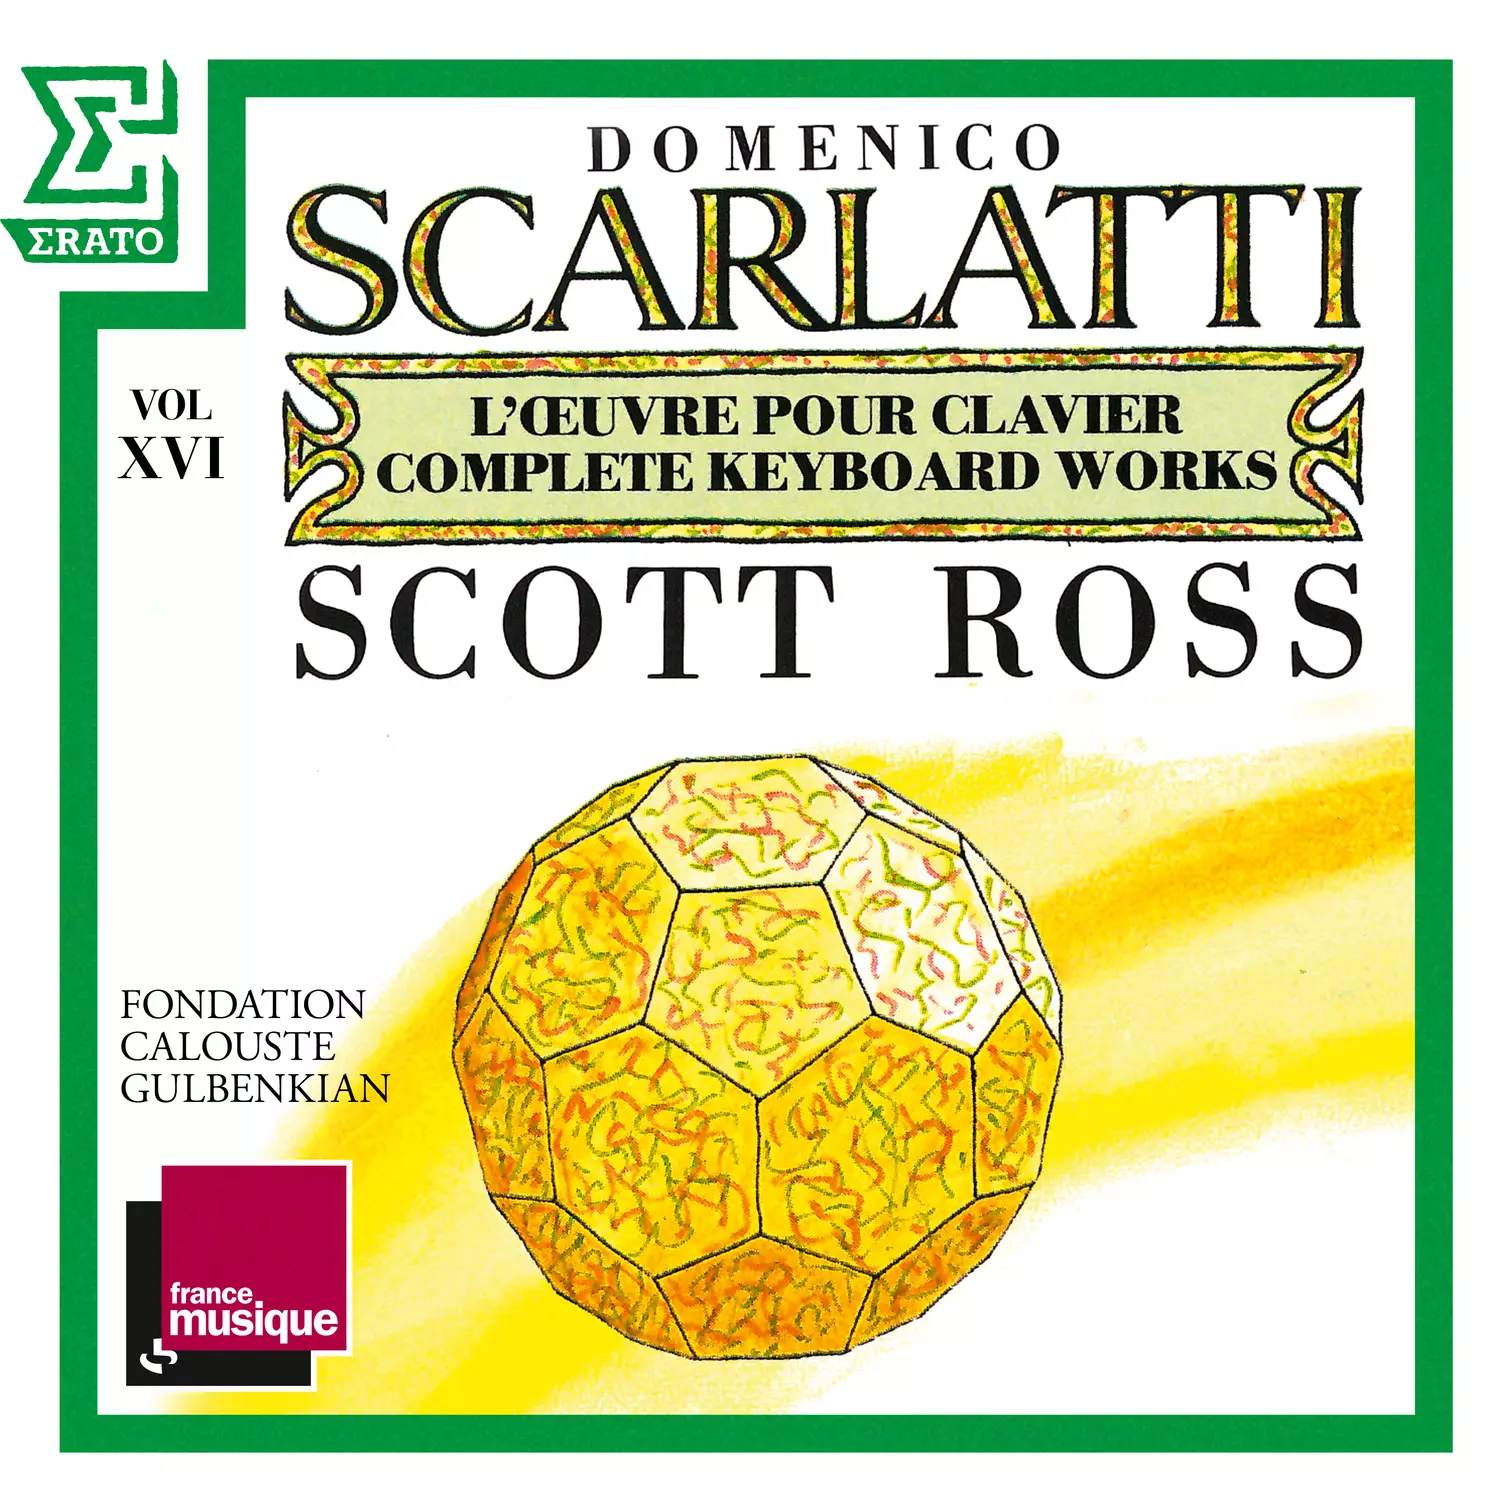 Scarlatti: The Complete Keyboard Works, Vol. 16: Sonatas, Kk. 312 - 331